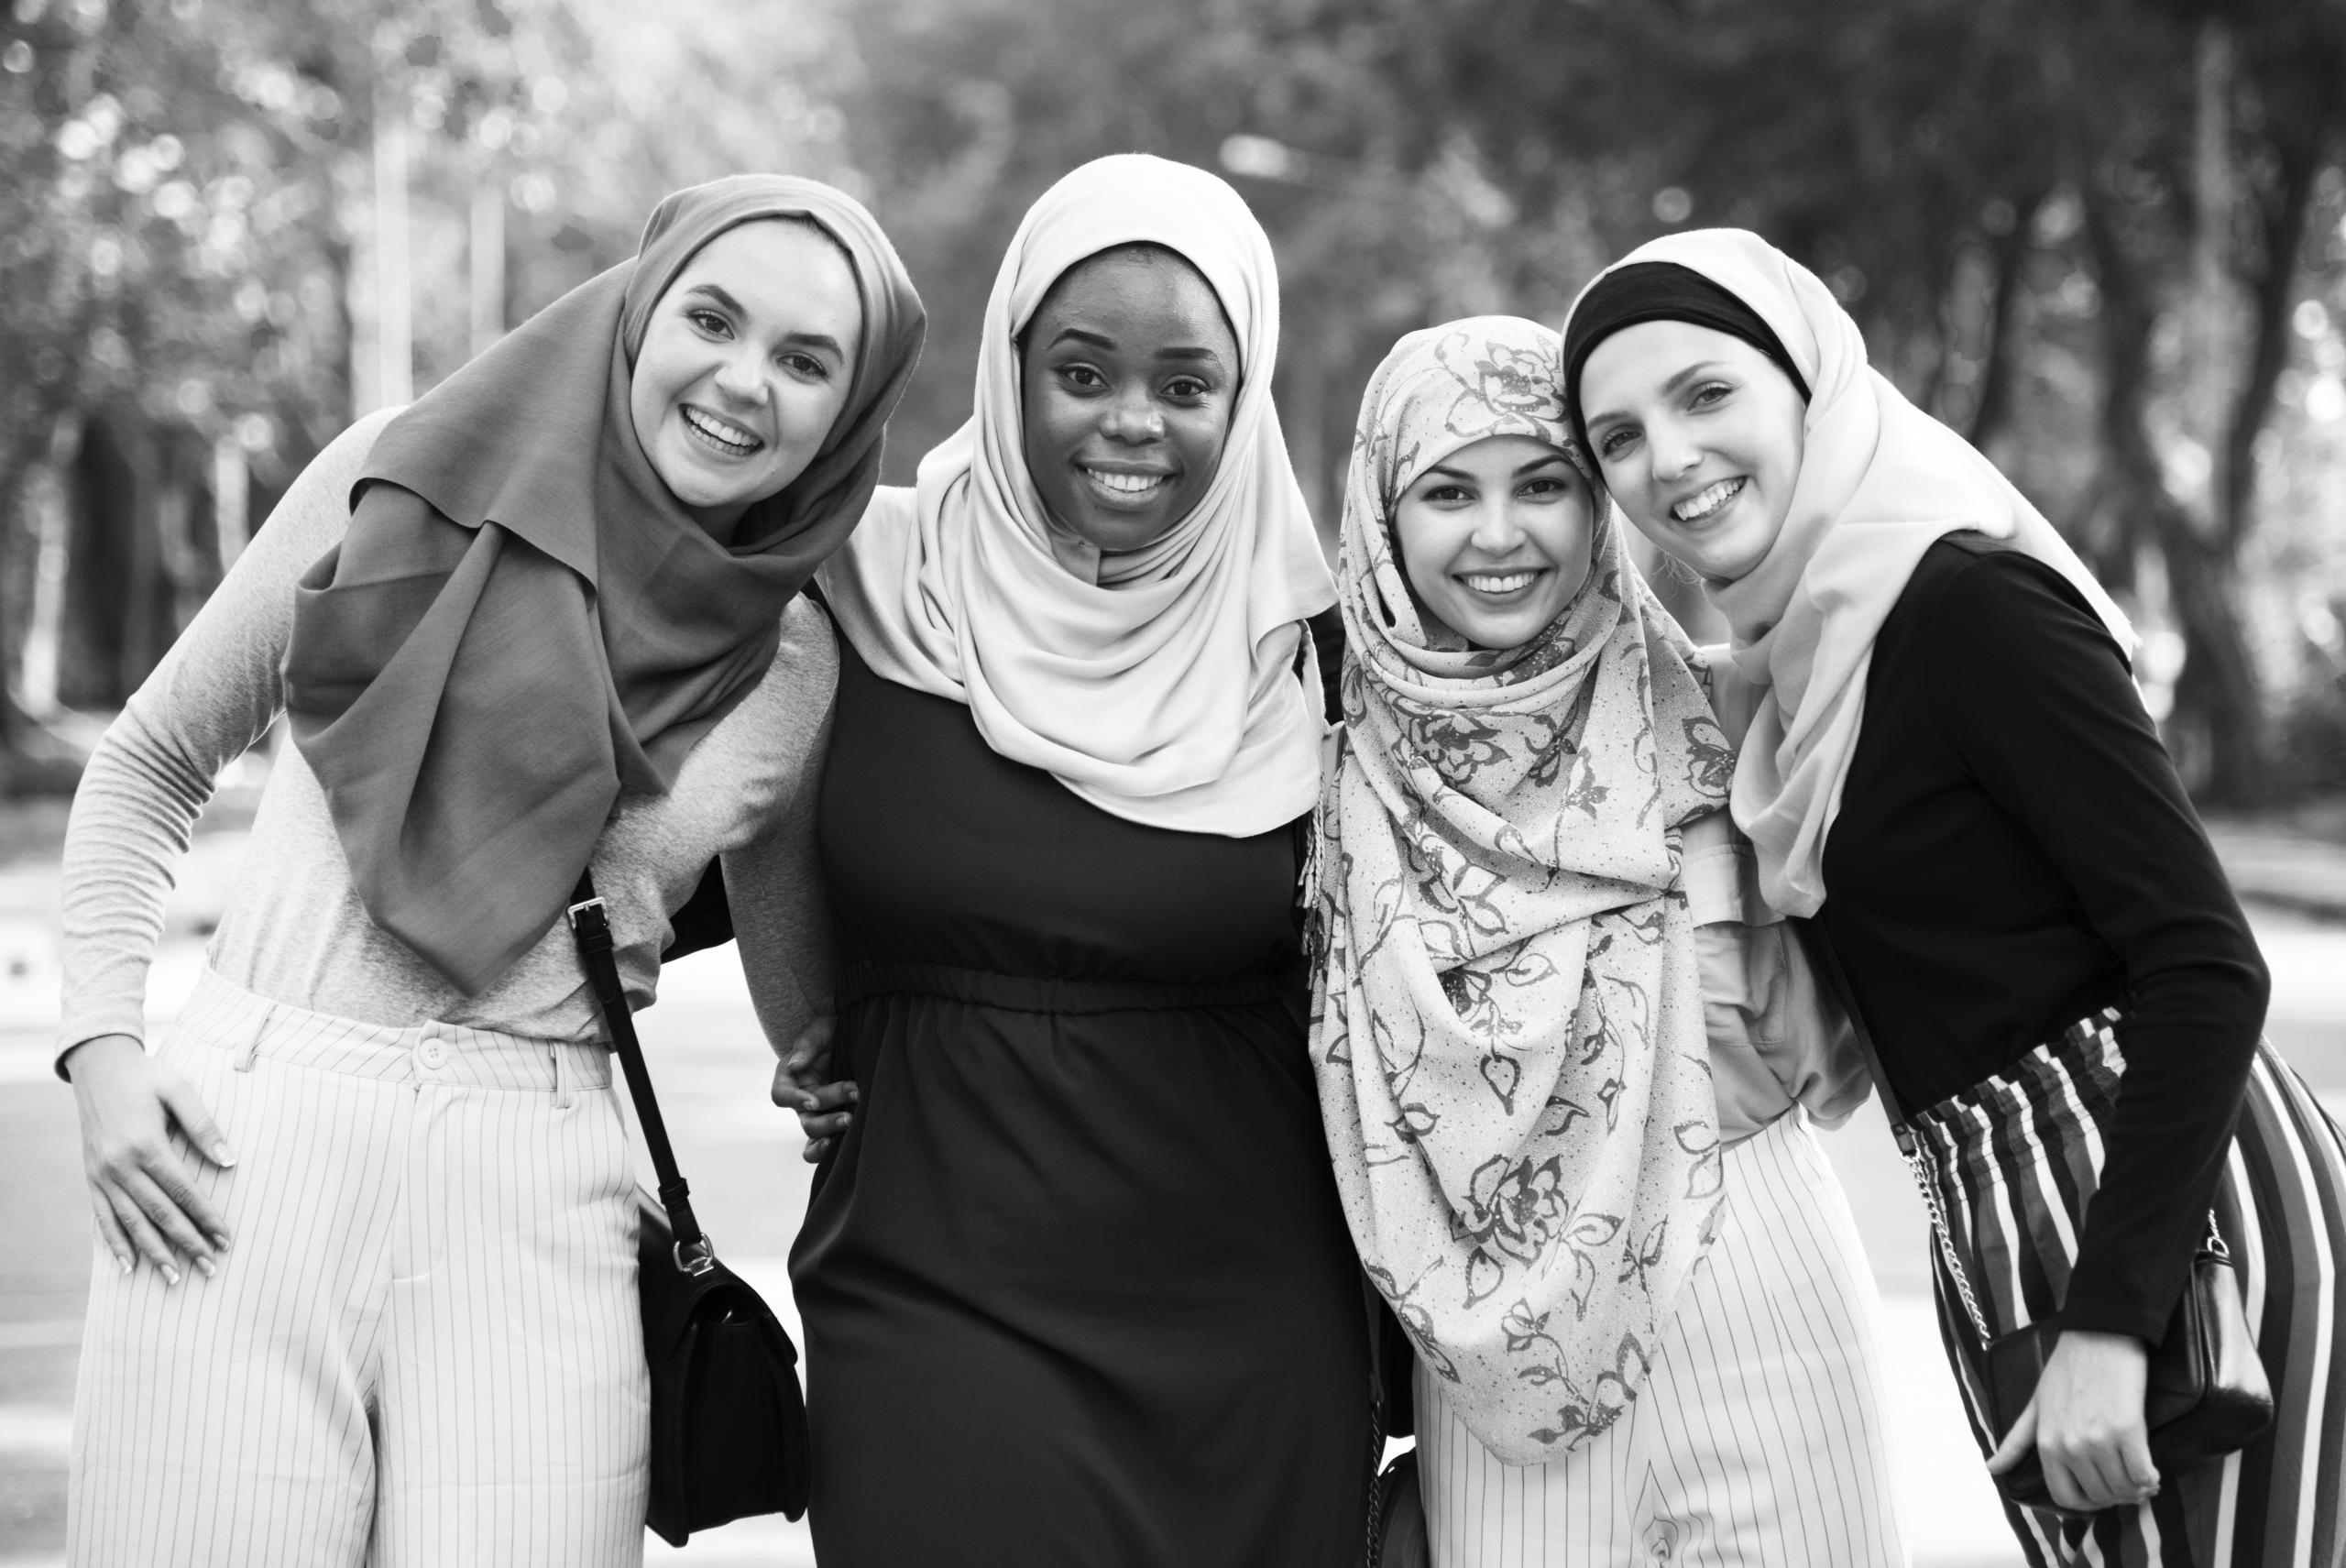 group islamic friends embracing smiling together scaled - Mütterzentrum e.V. Leipzig